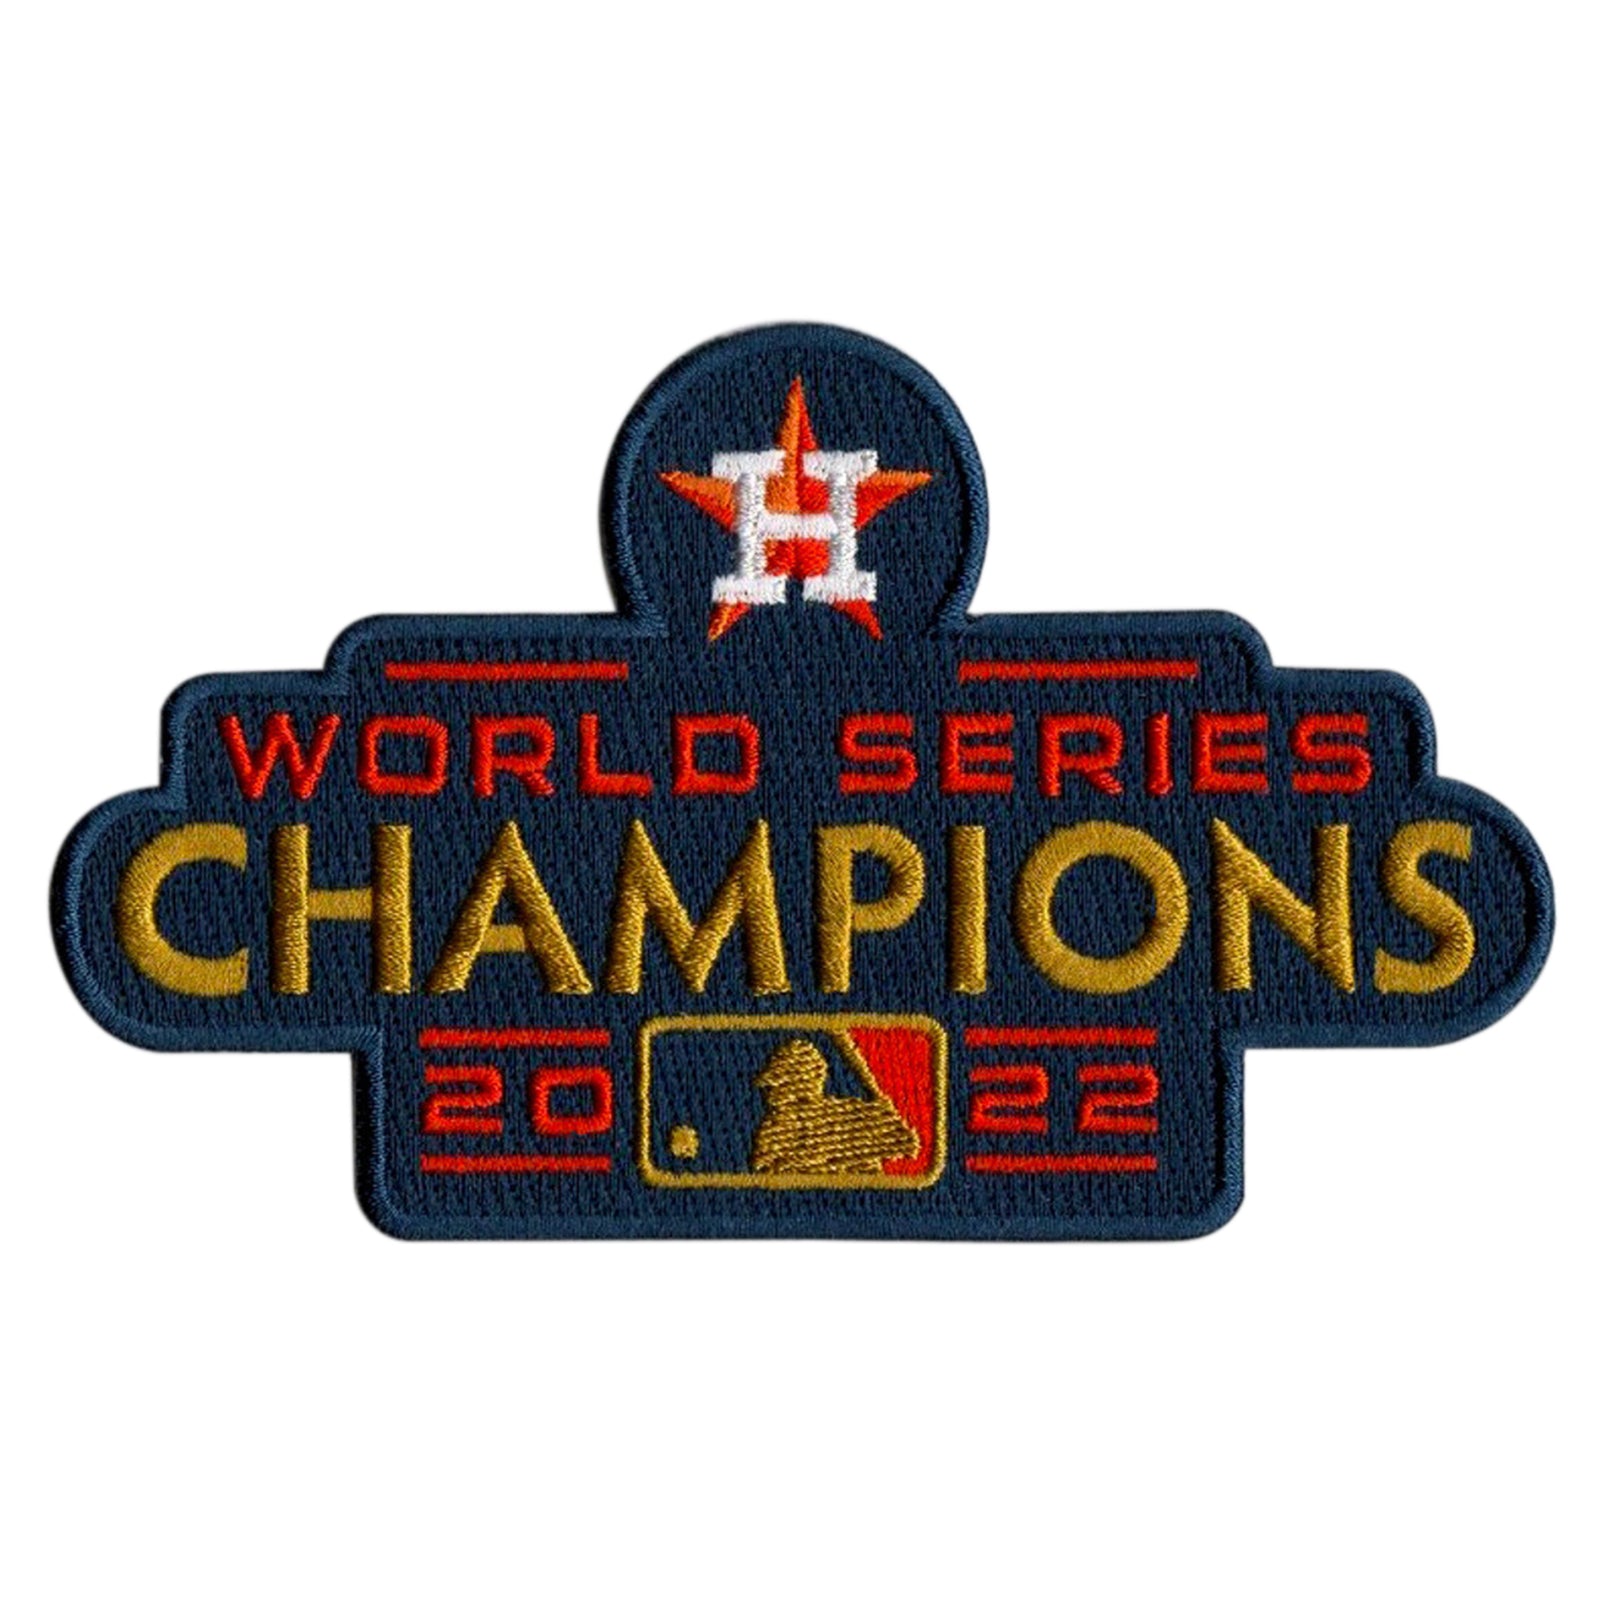 2022 MLB World Series Champions Houston Astros Jersey Patch